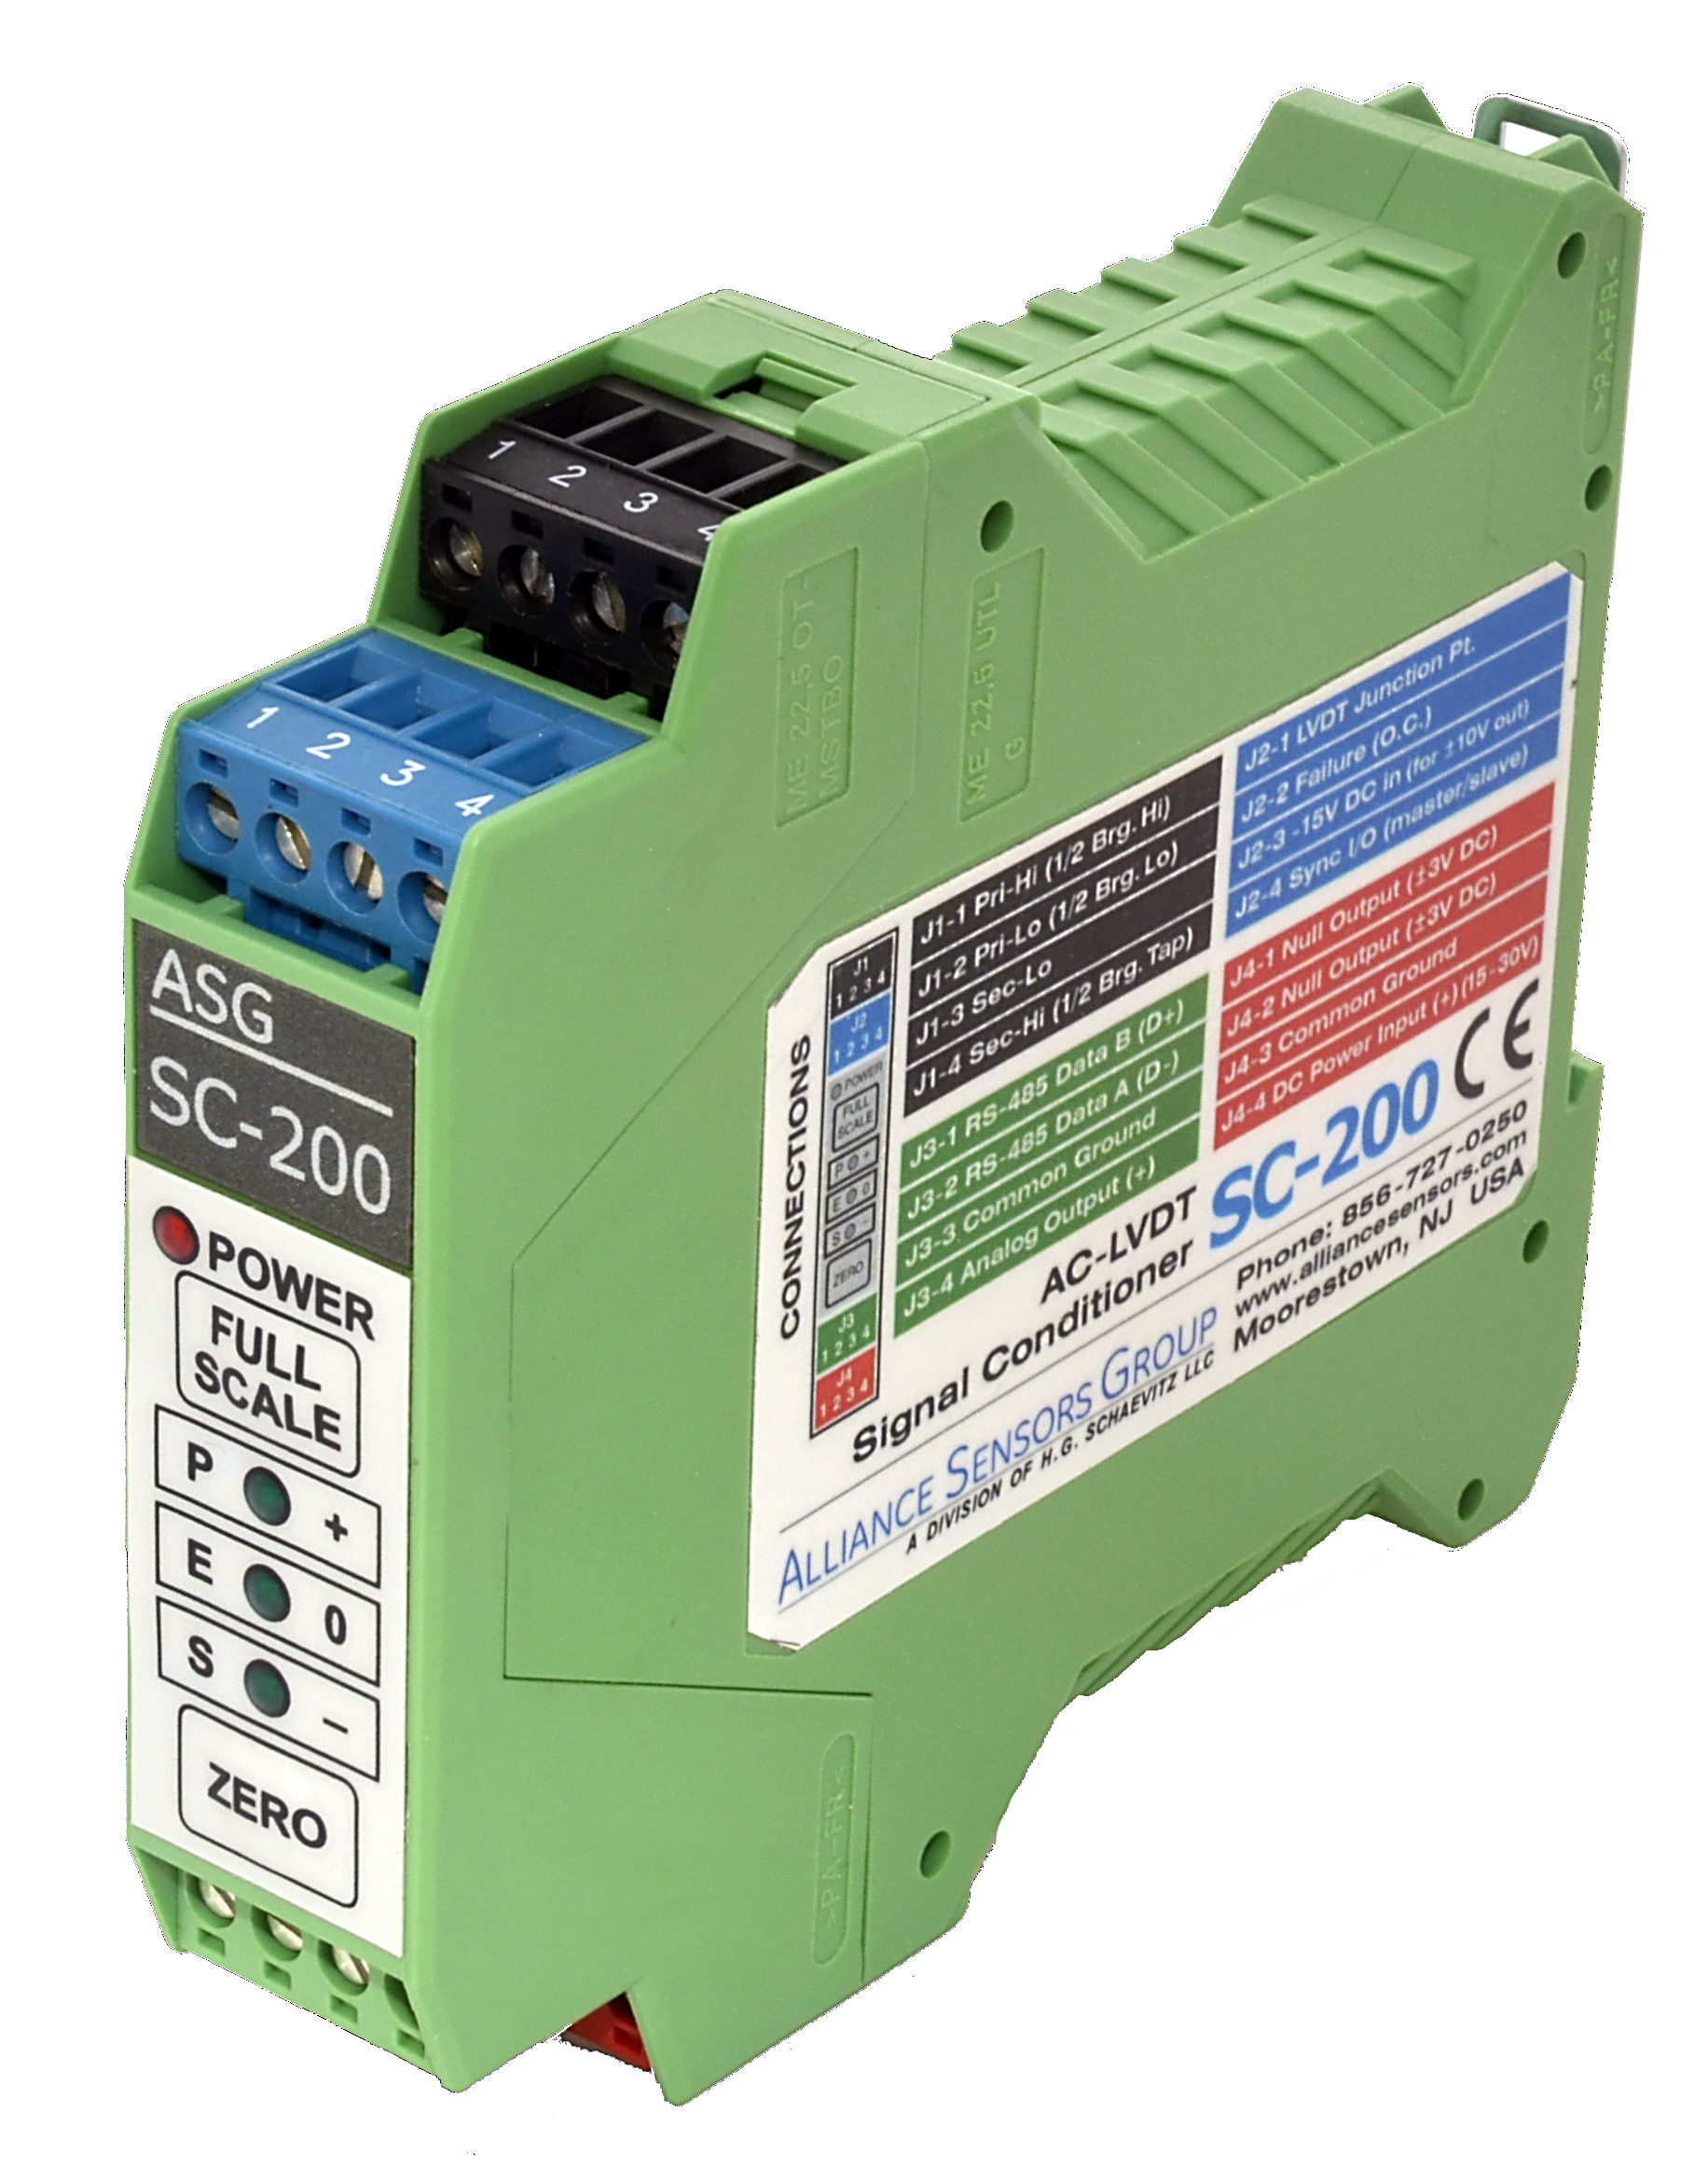 Alliance Sensor Groups SC-200 LVDT signal conditioner 